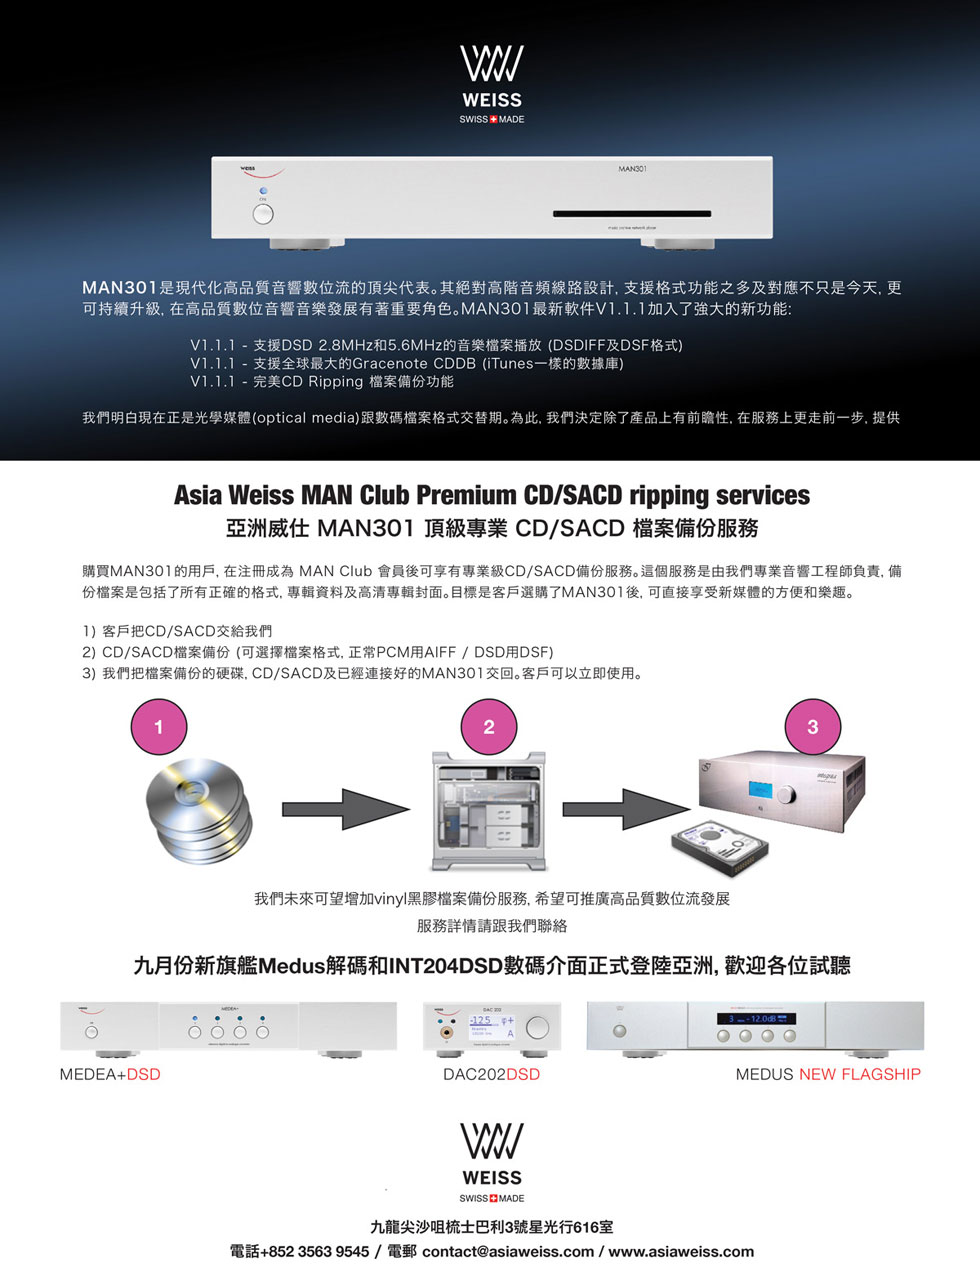 Asia Weiss Premium Services